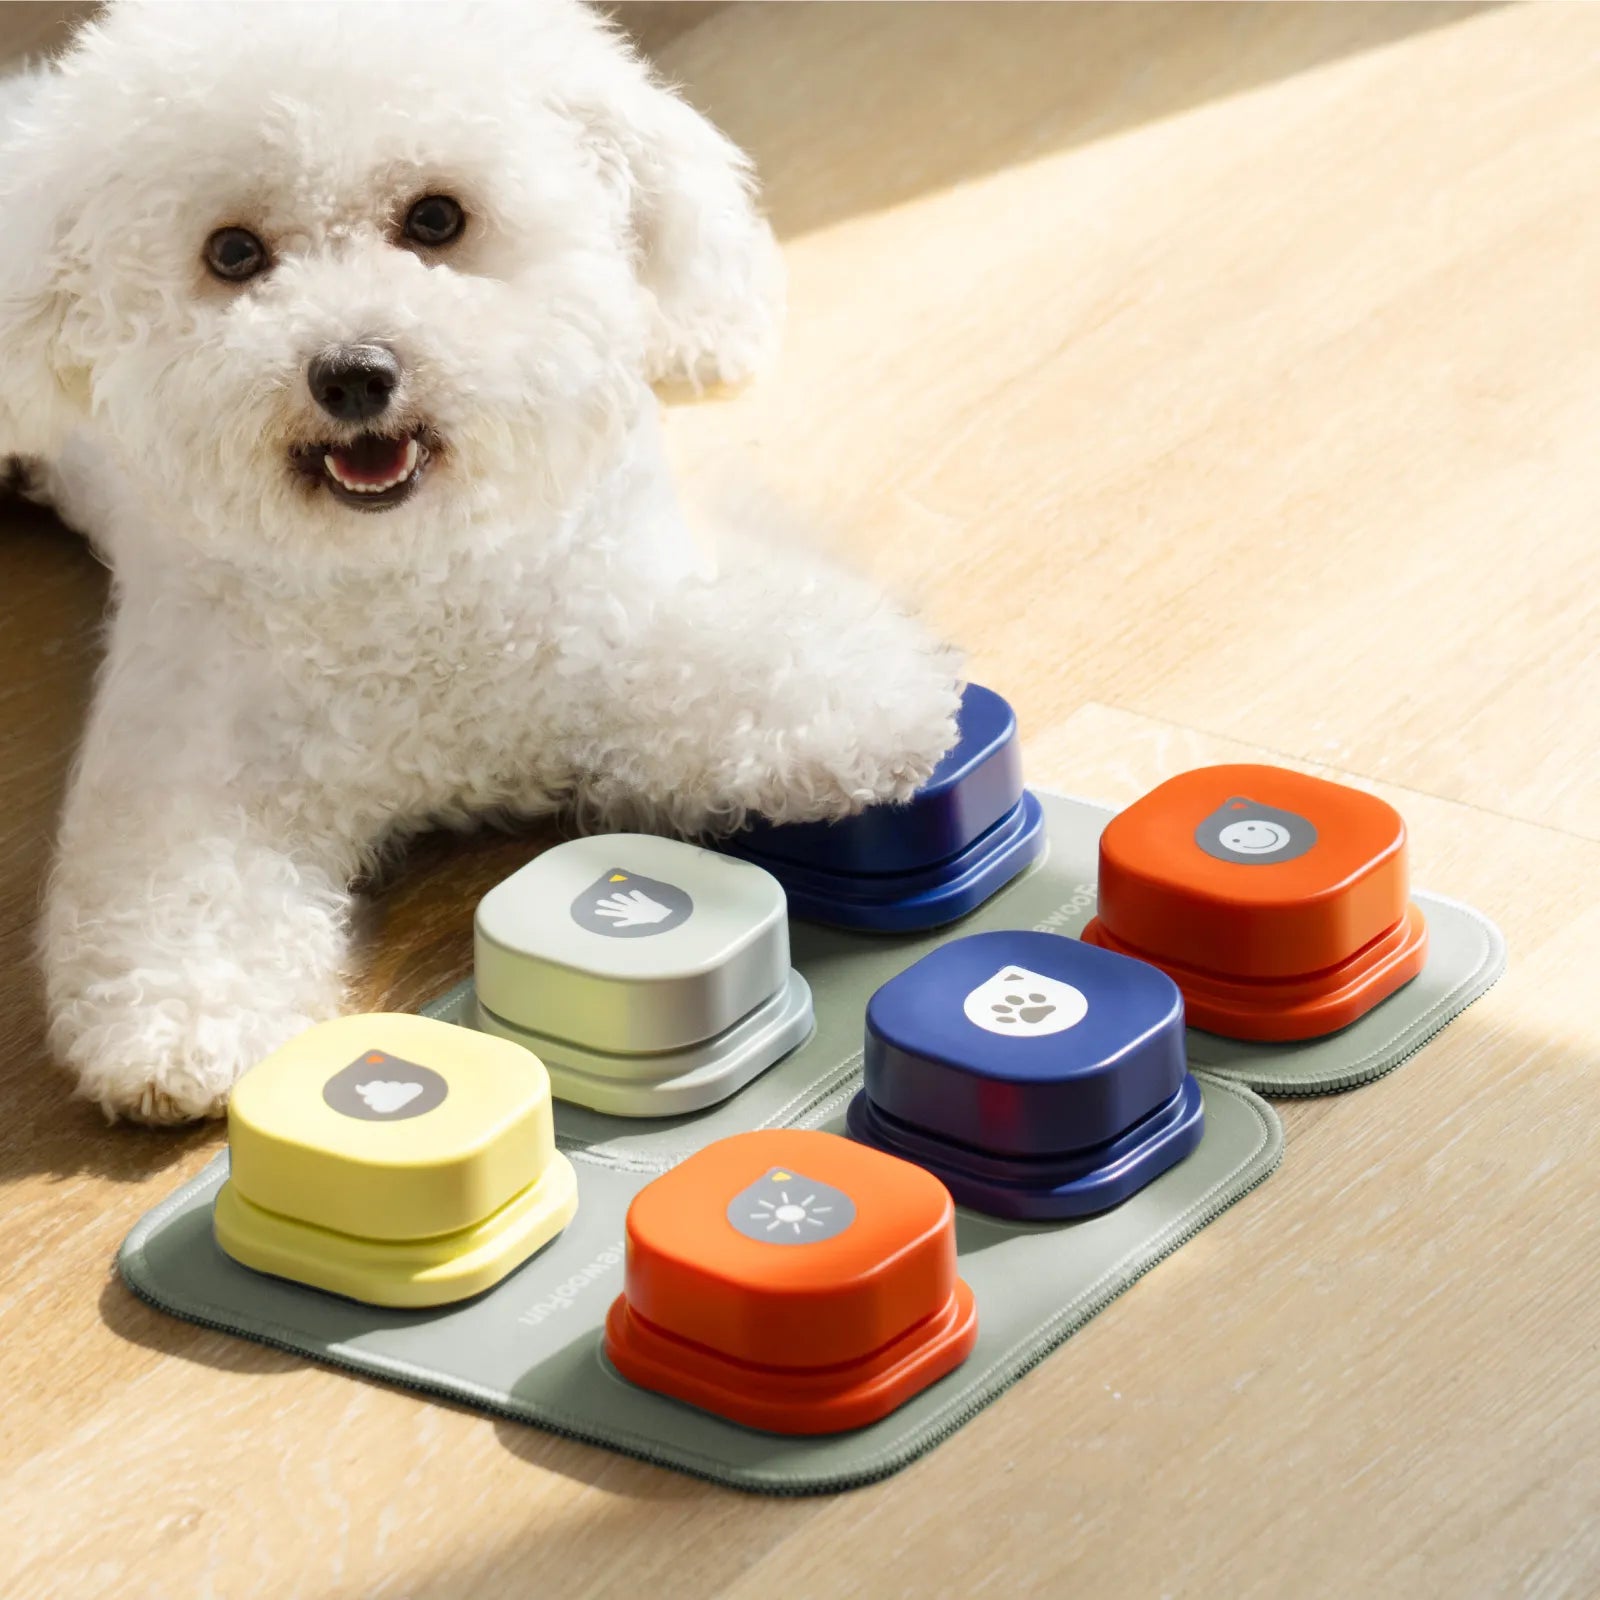 MEWOOFUN Dog Communication Training Toy: Teach, Train, Interact with Your Pet  petlums.com   